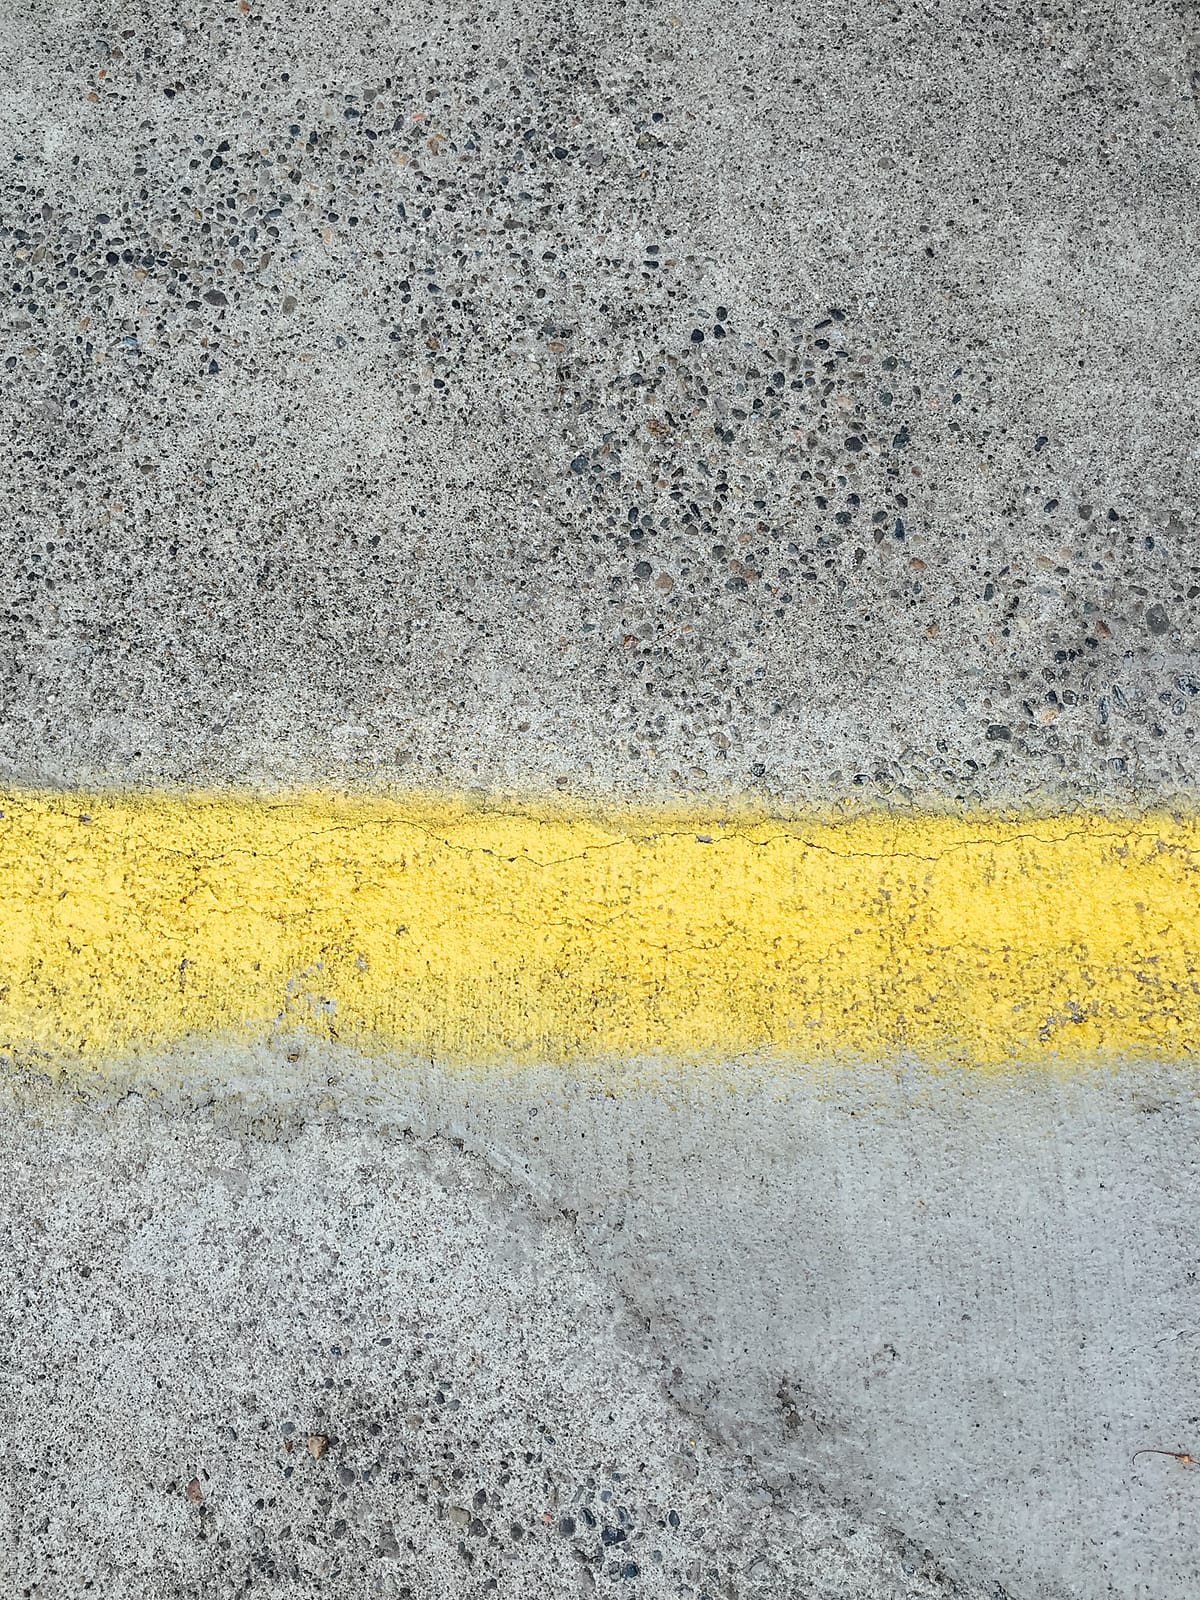 Painted yellow stripe on urban sidewalk and street